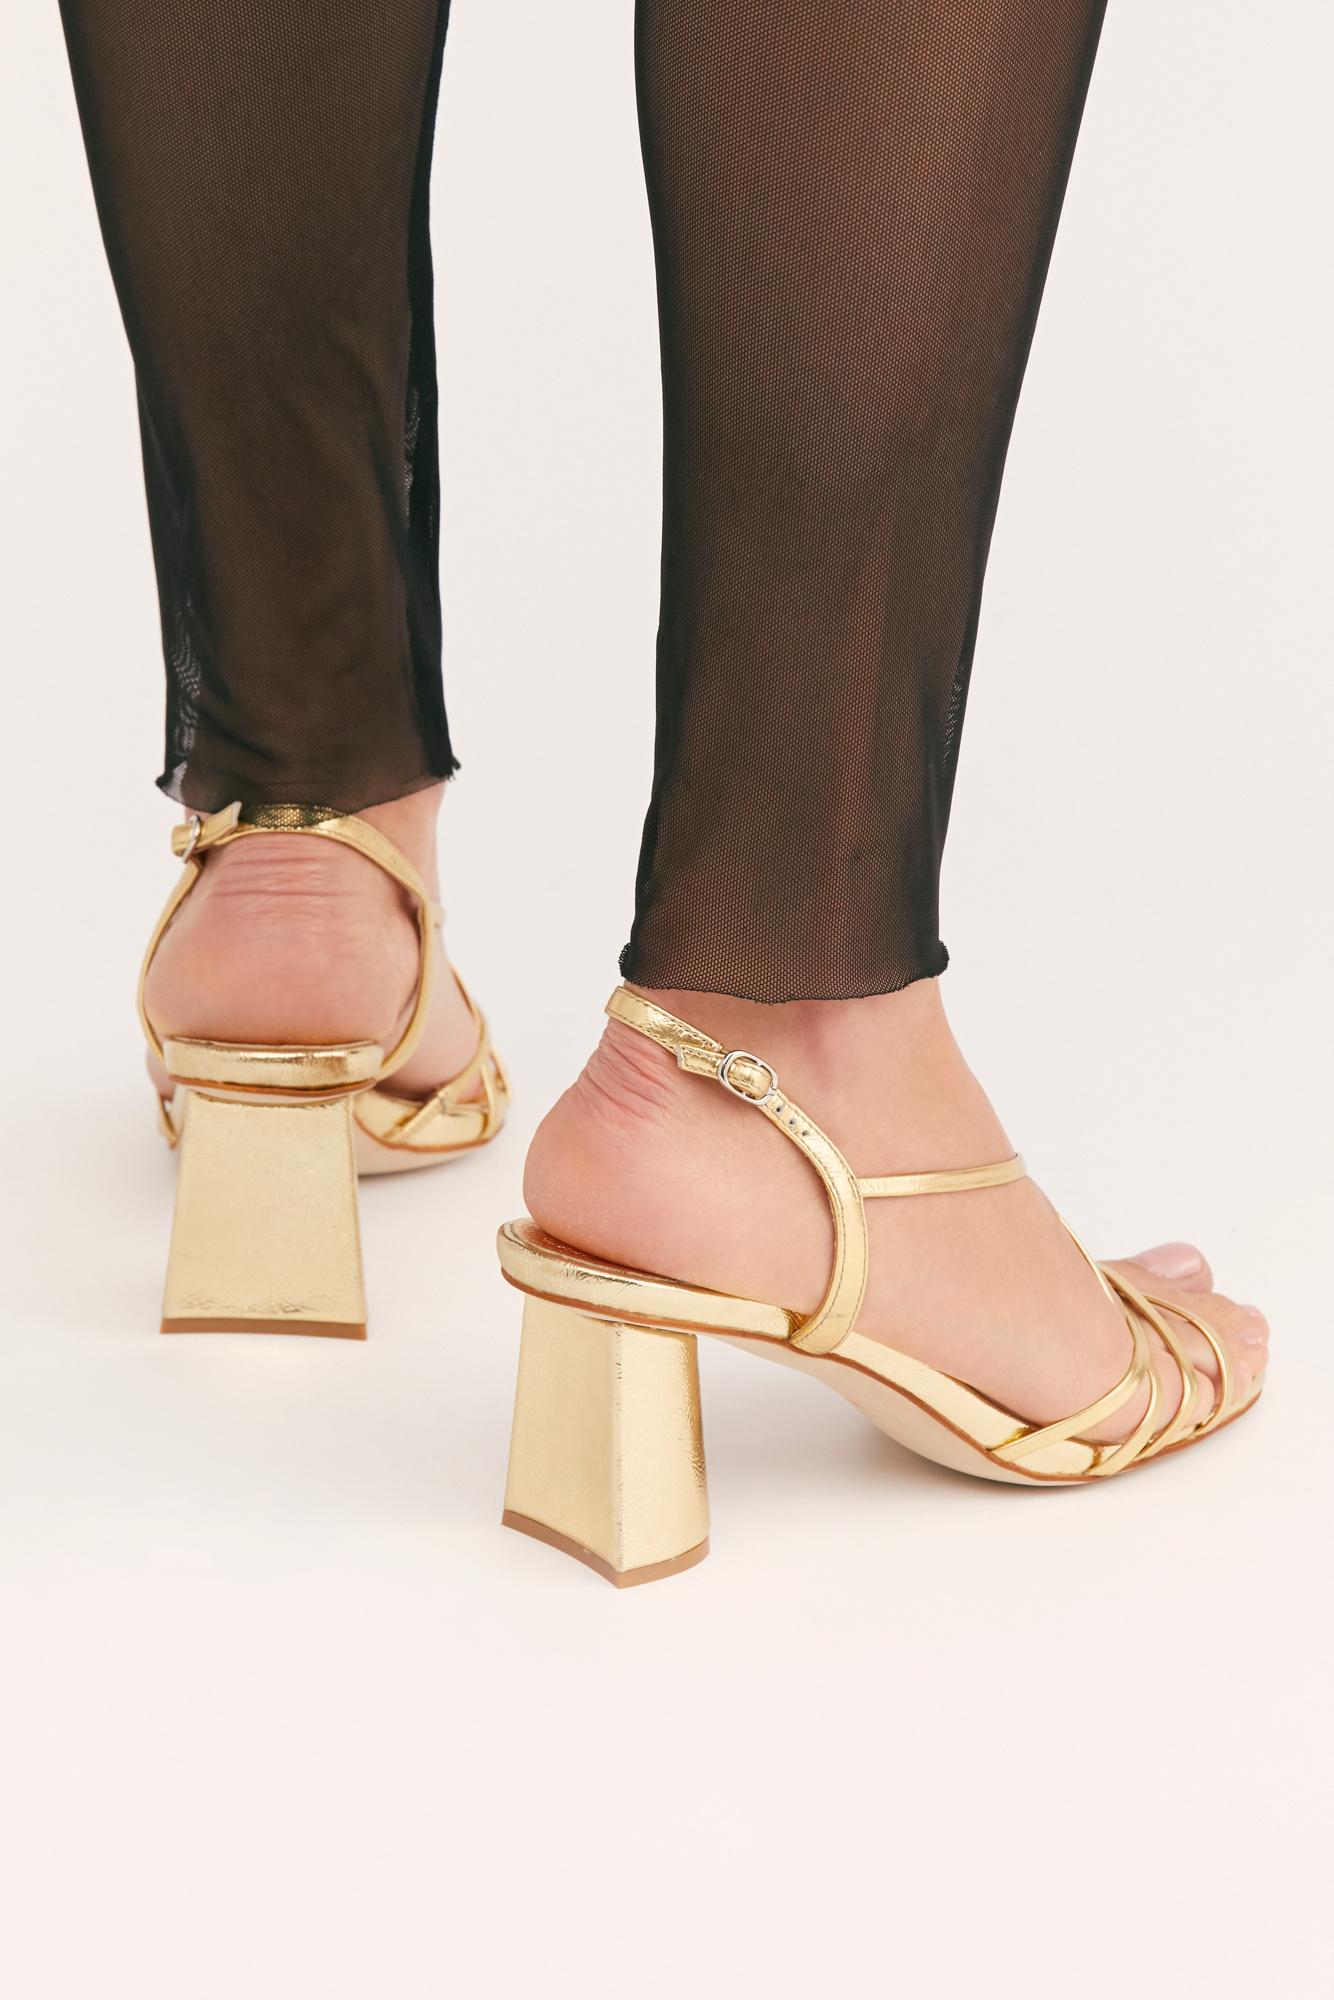 jeffrey campbell gold heels